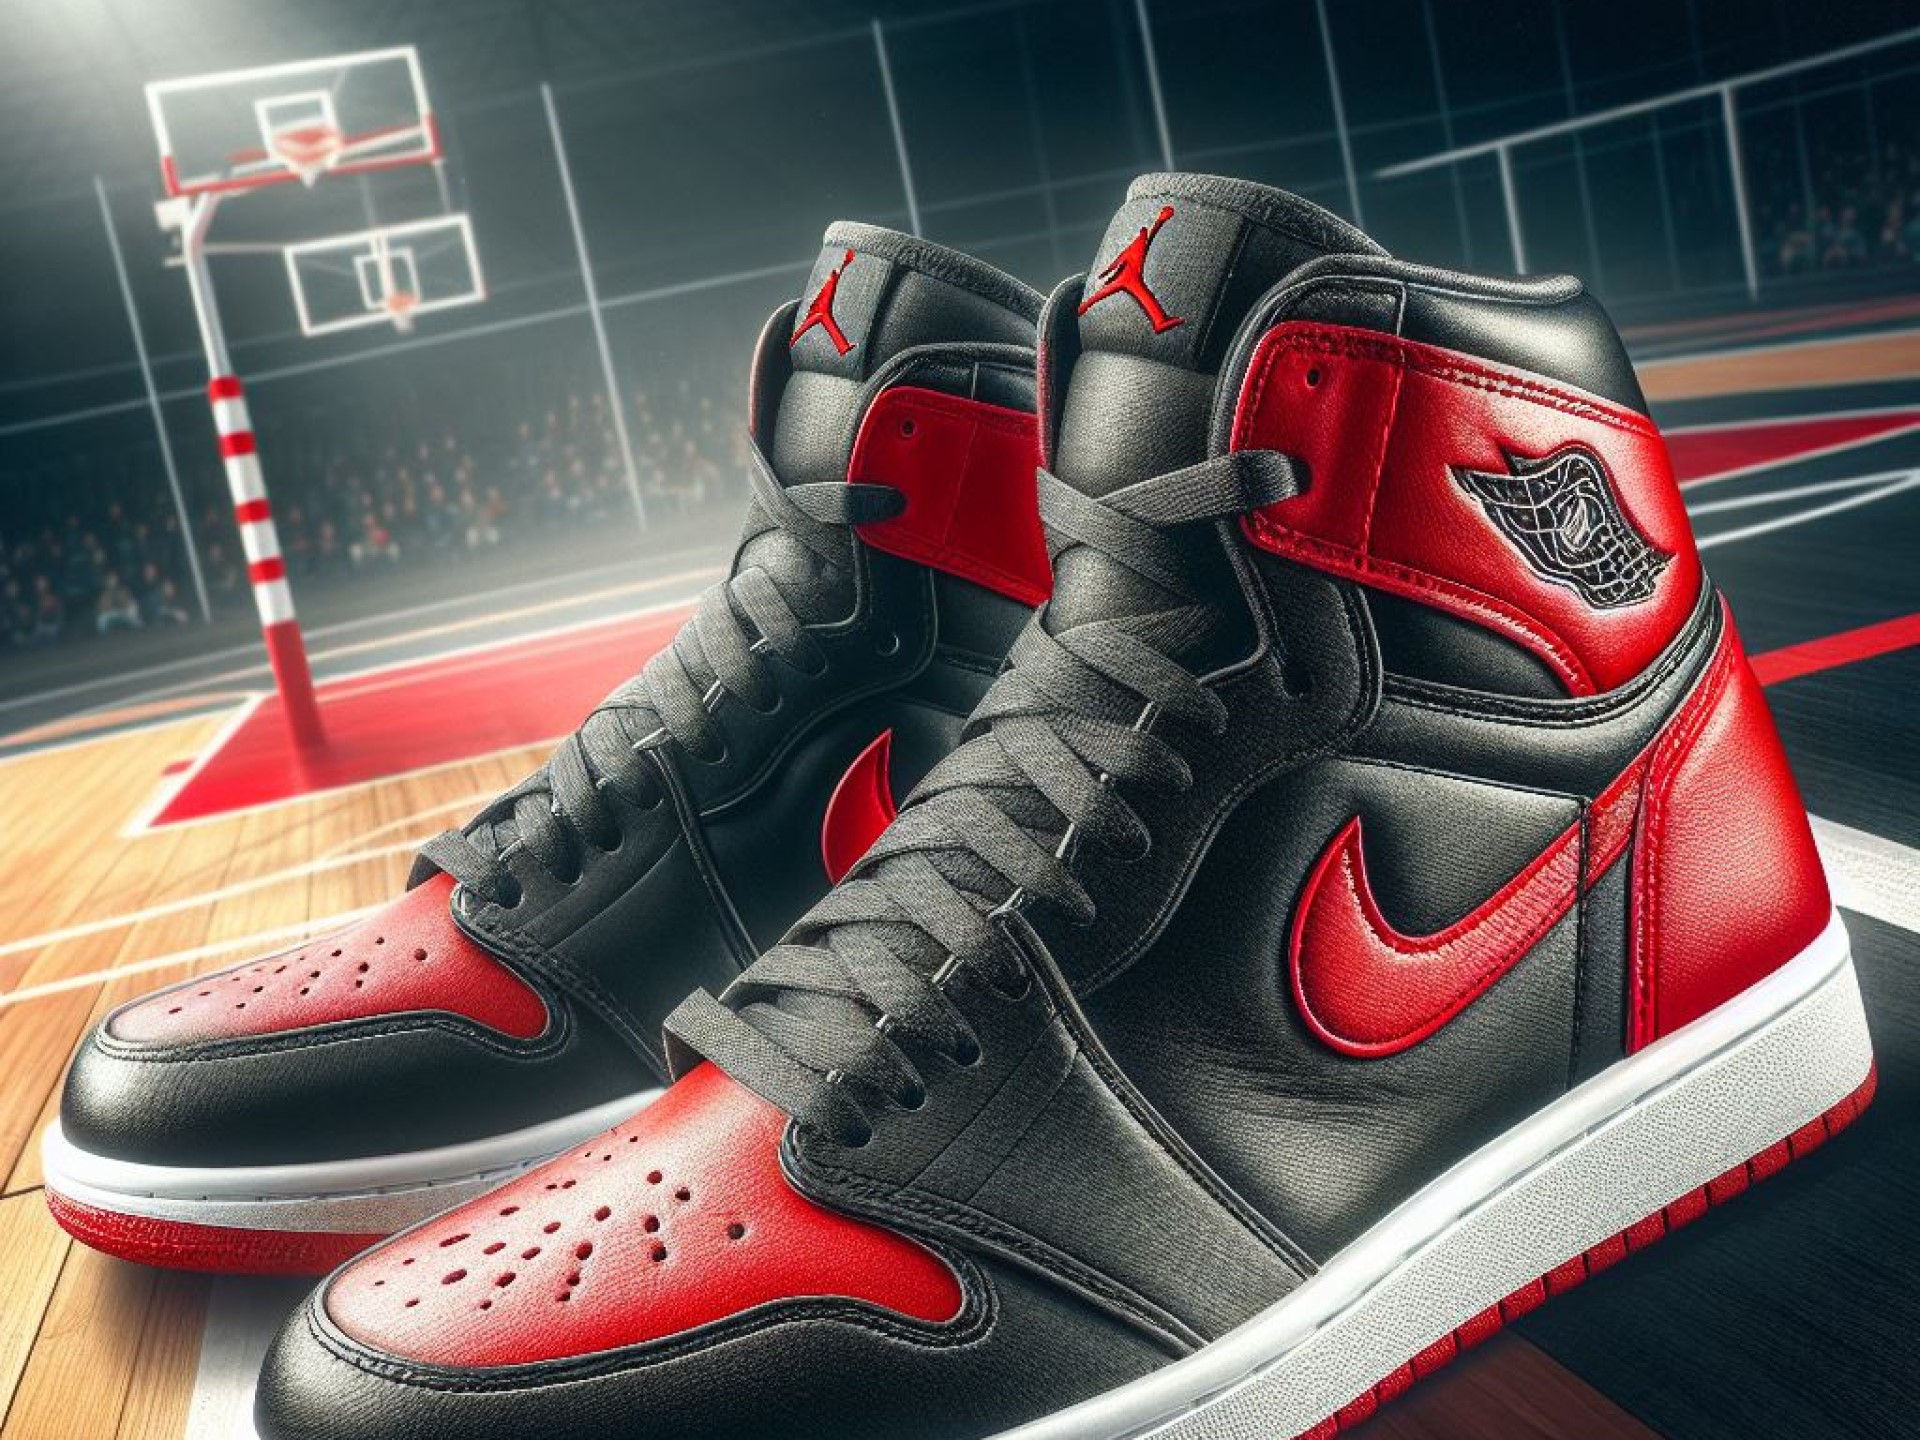 Sejarah Terciptanya Sepatu Air Jordan yang Jarang Diketahui Orang: MJ Tadinya Penggemar Adidas?